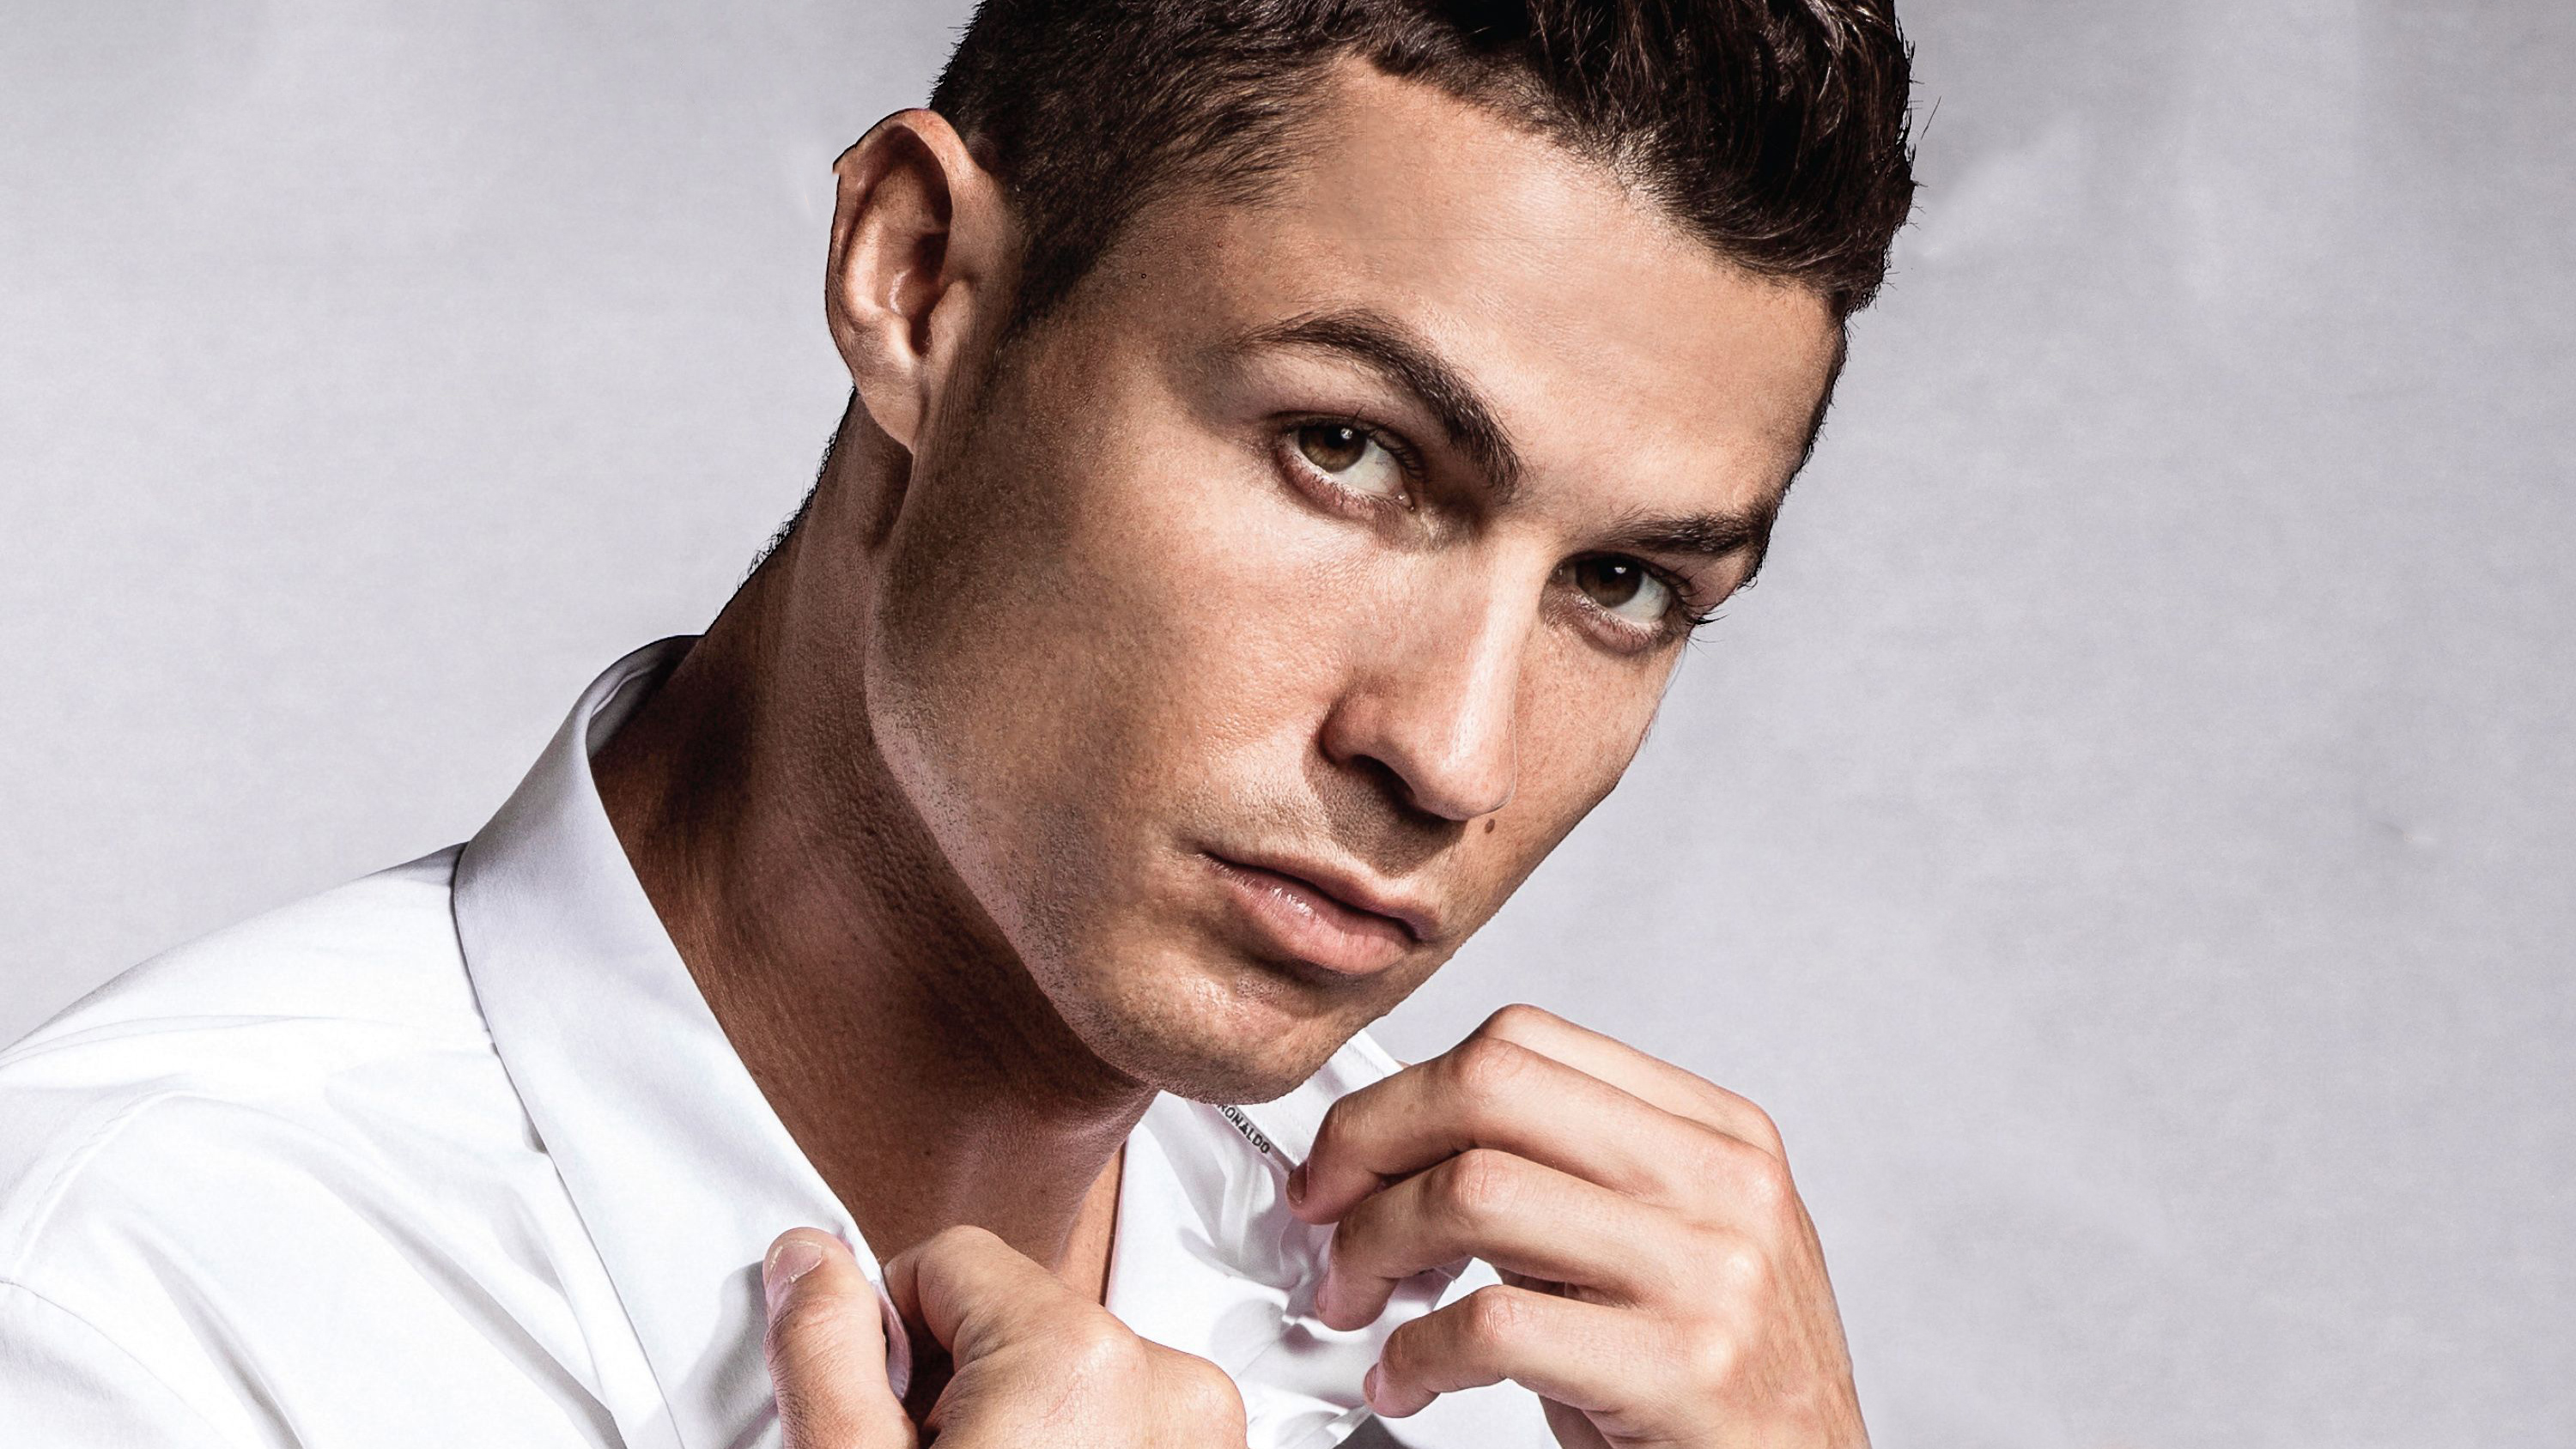 Portuguese soccer player Cristiano Ronaldo in a white shirt wallpaper and image, picture, photo